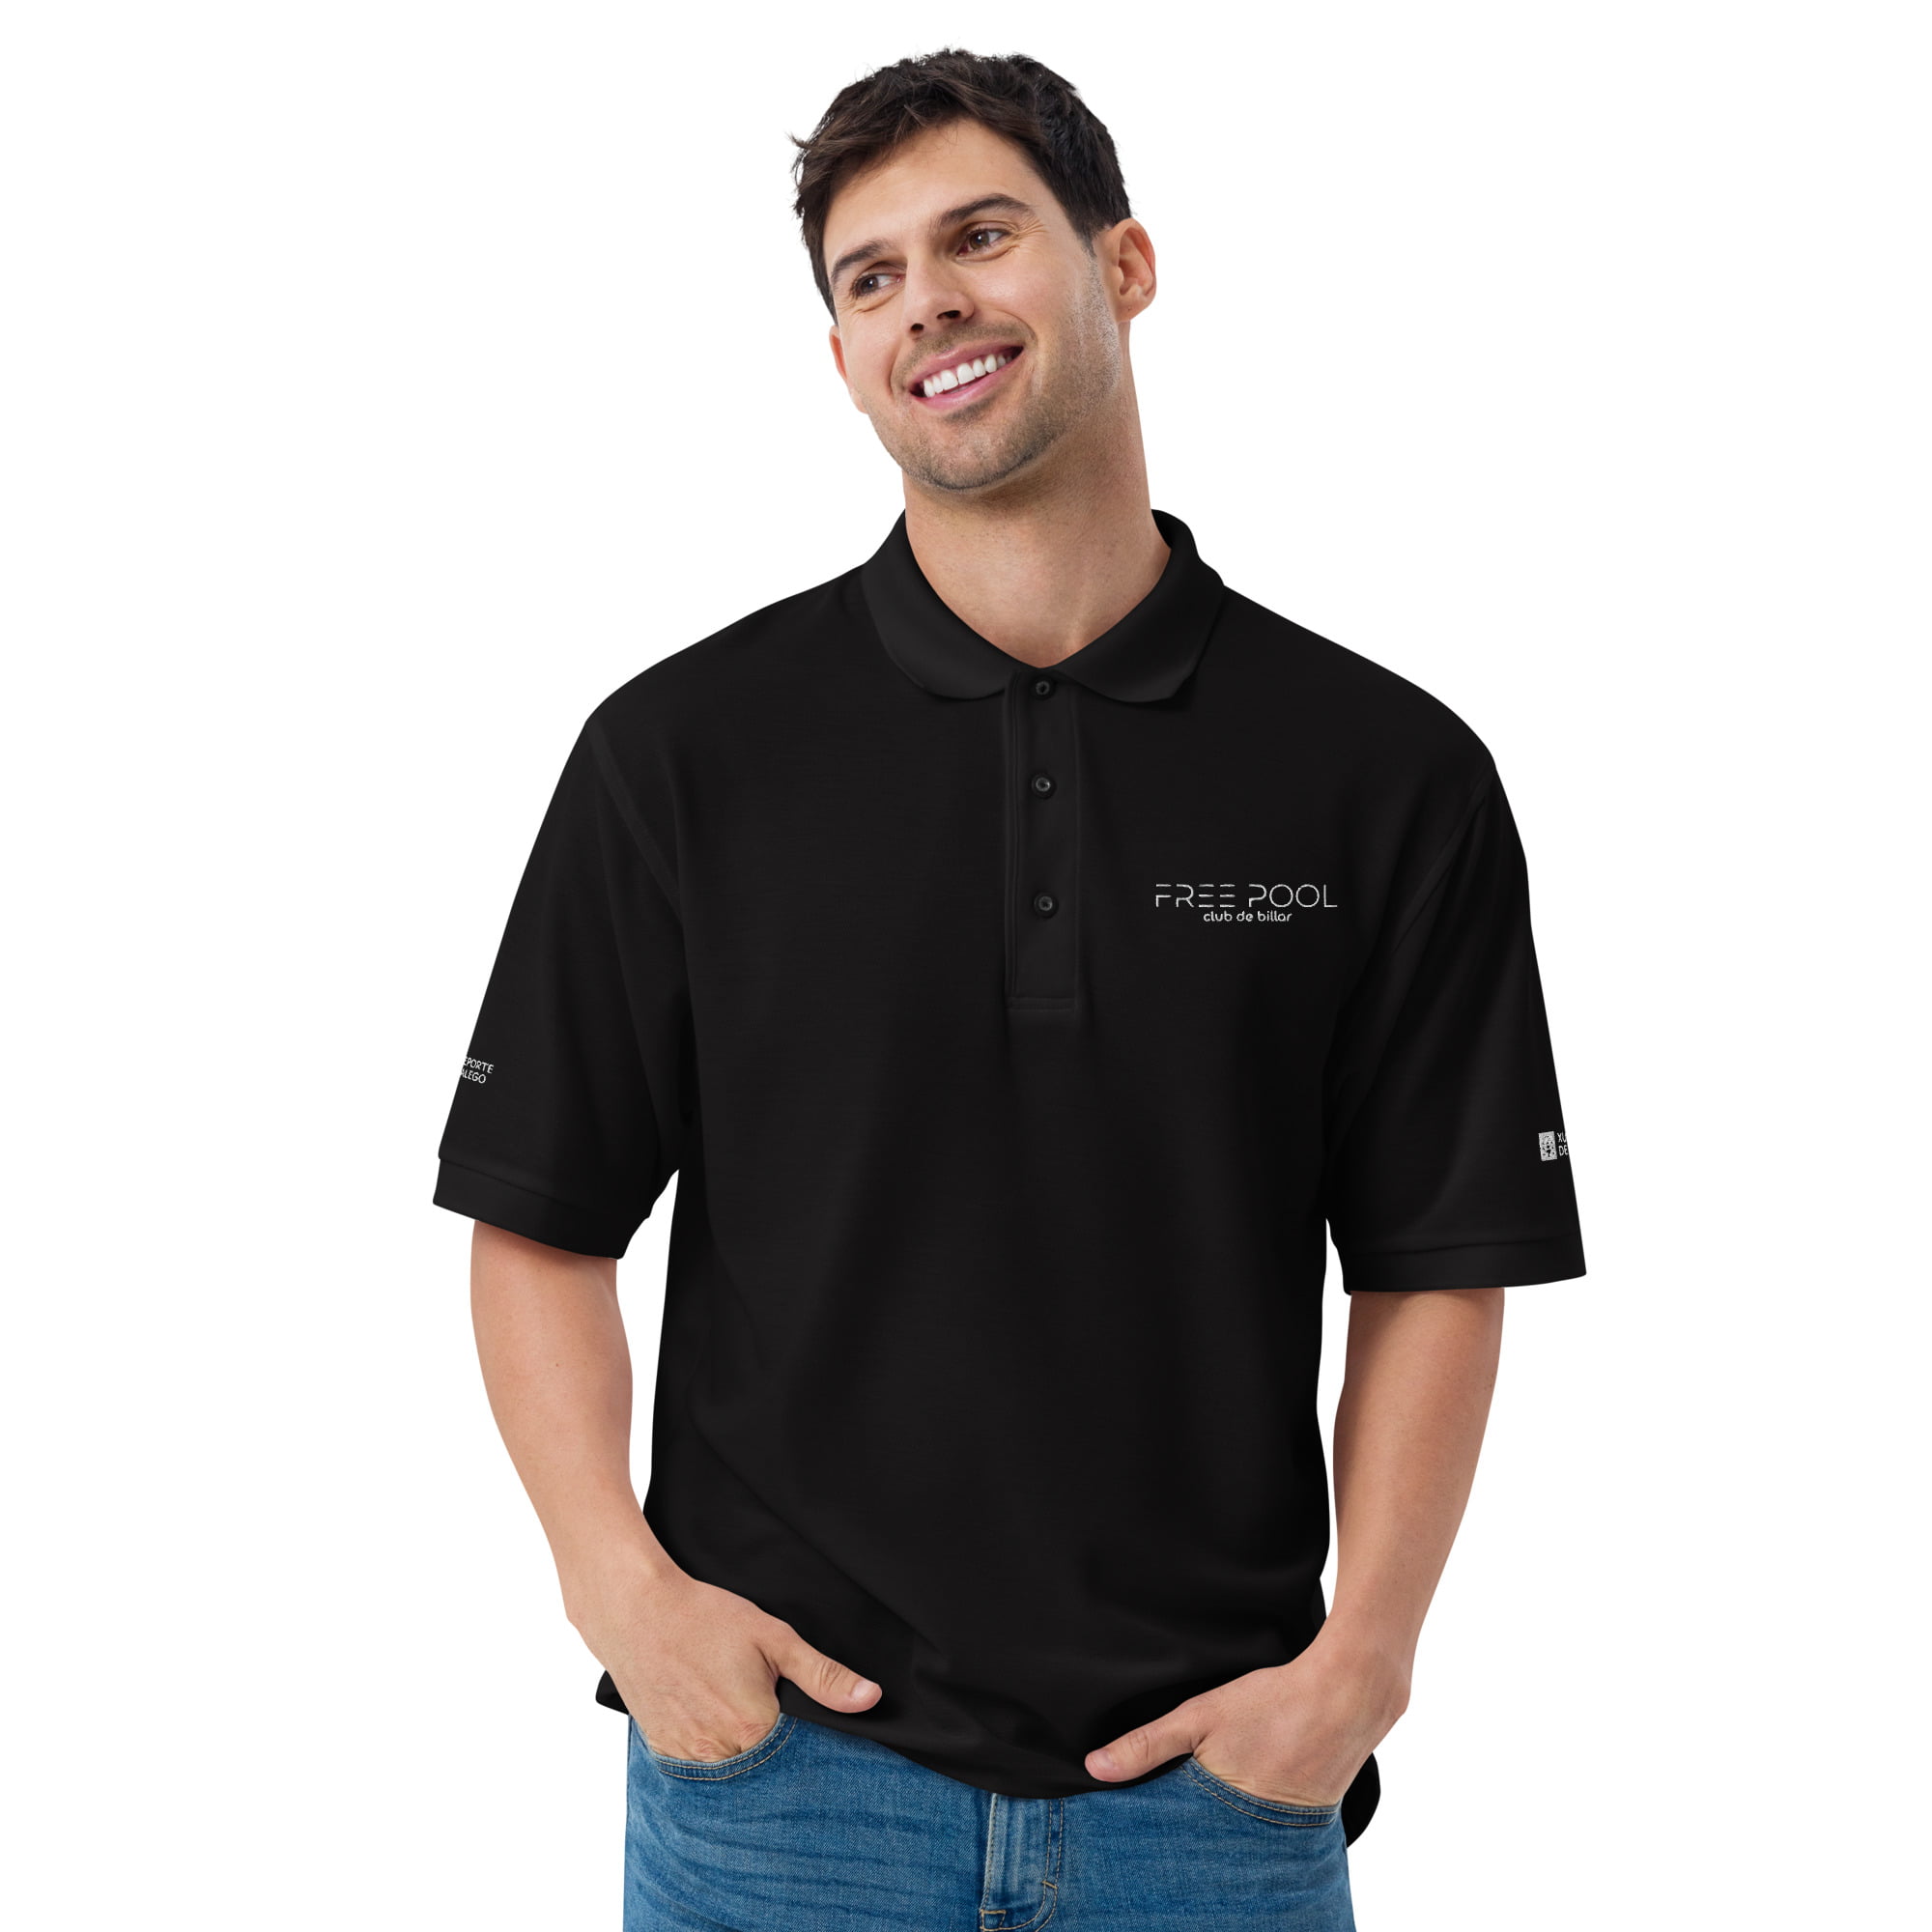 premium-polo-shirt-black-front-64864442f0f57.jpg